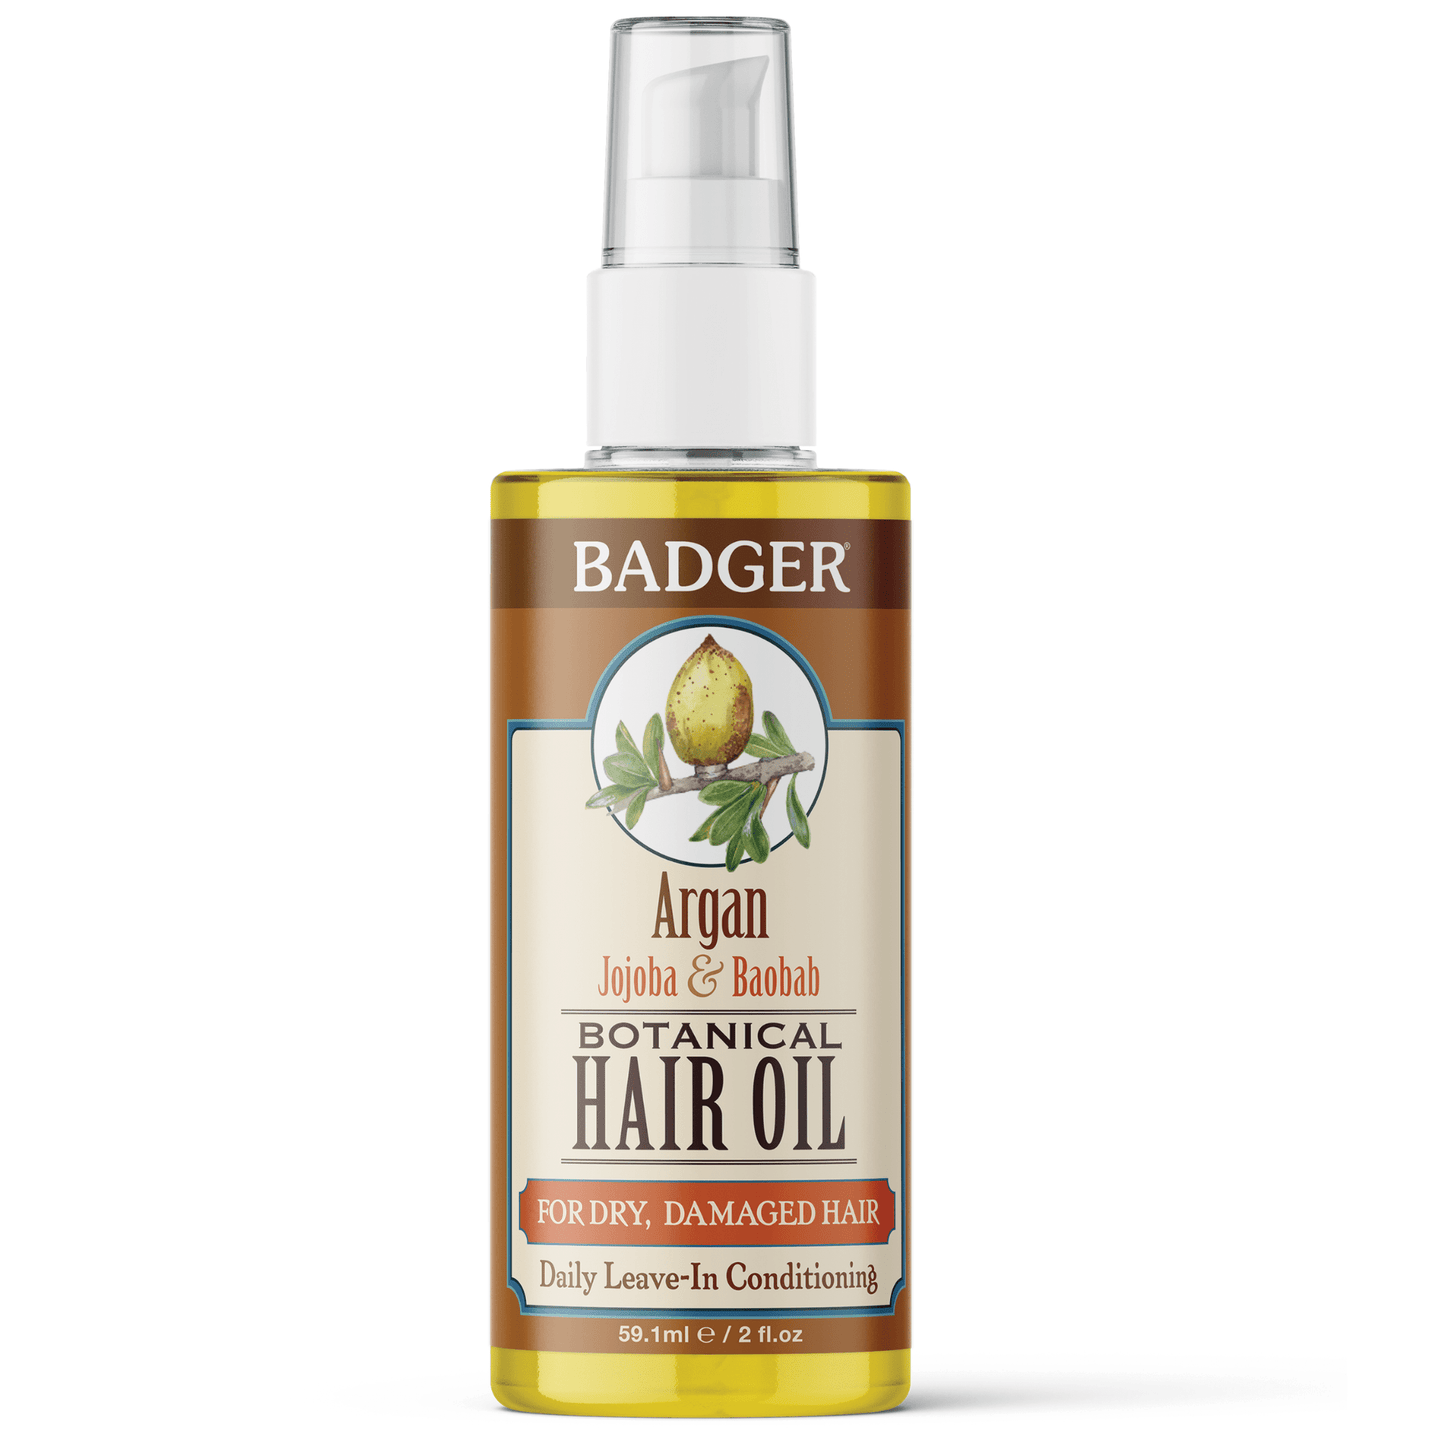 Primary Image of Argan Botanical Hair Oil